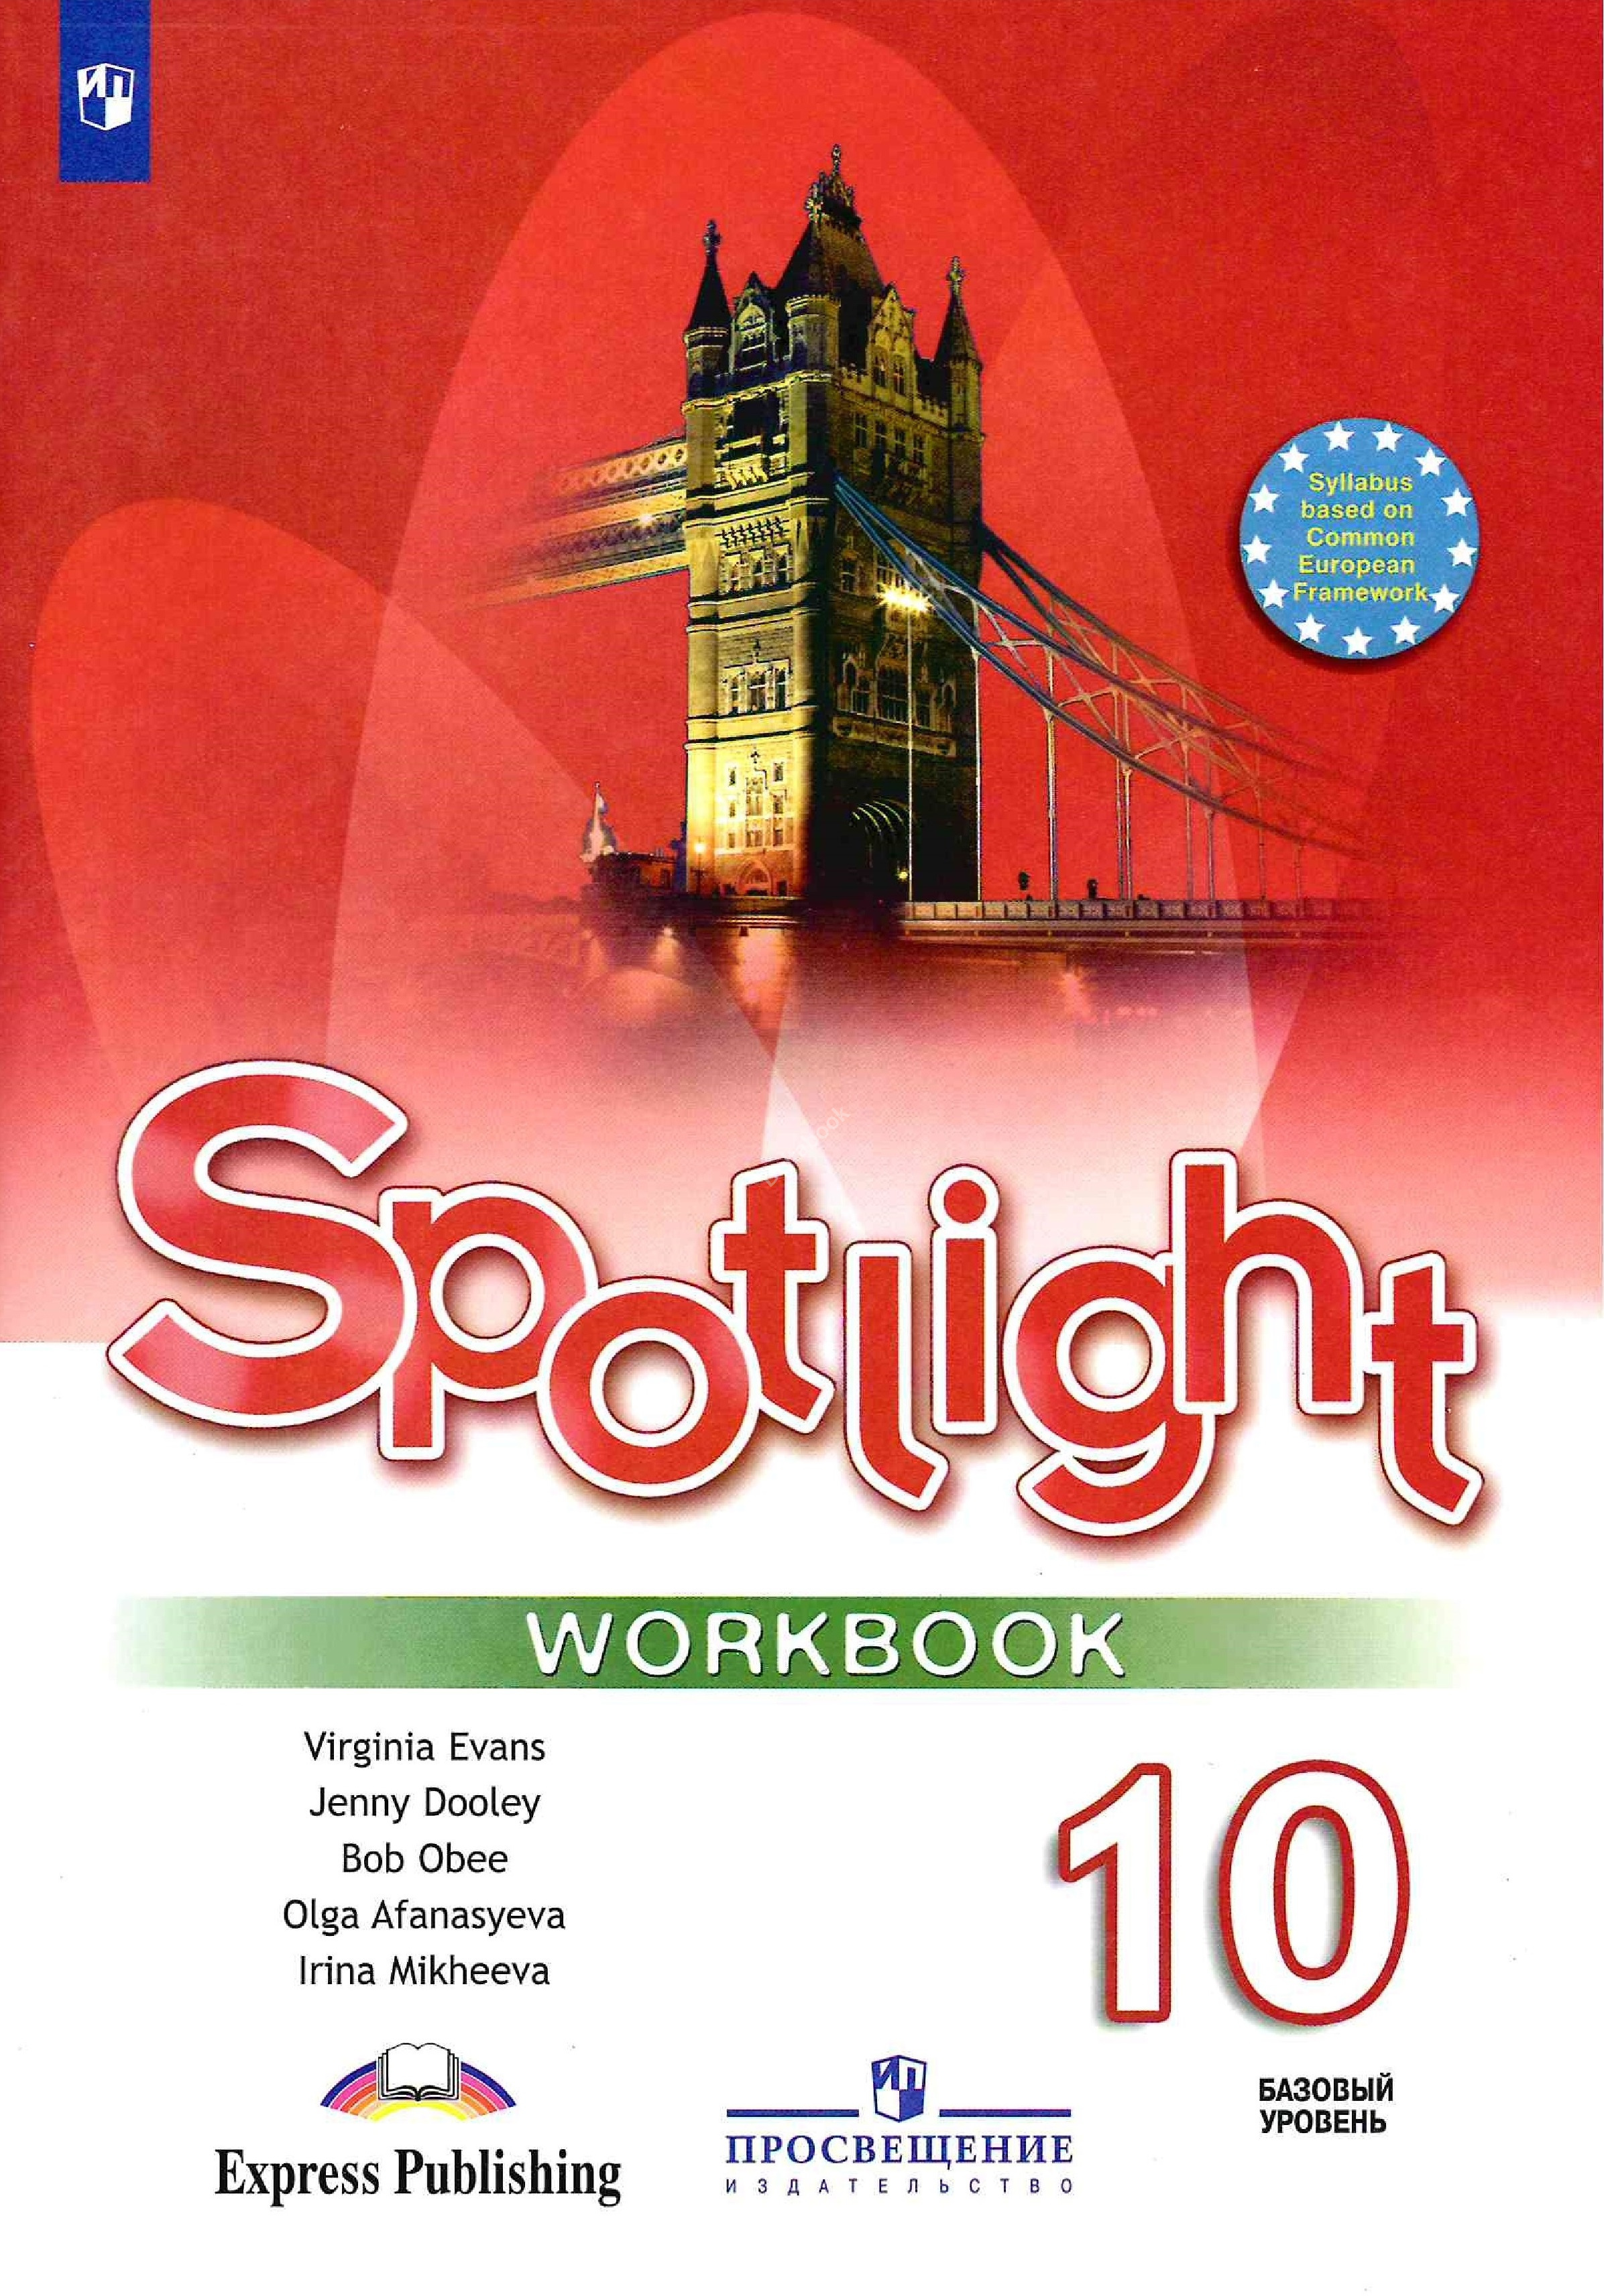 Английский в фокусе 8 класс тетрадь. Workbook Spotlight 5 класс ваулина. Spotlight 5 Workbook английский язык Эванс. Англ 5 класс рабочая тетрадь Spotlight. Тетради для английского языка 5 класс спотлайт.